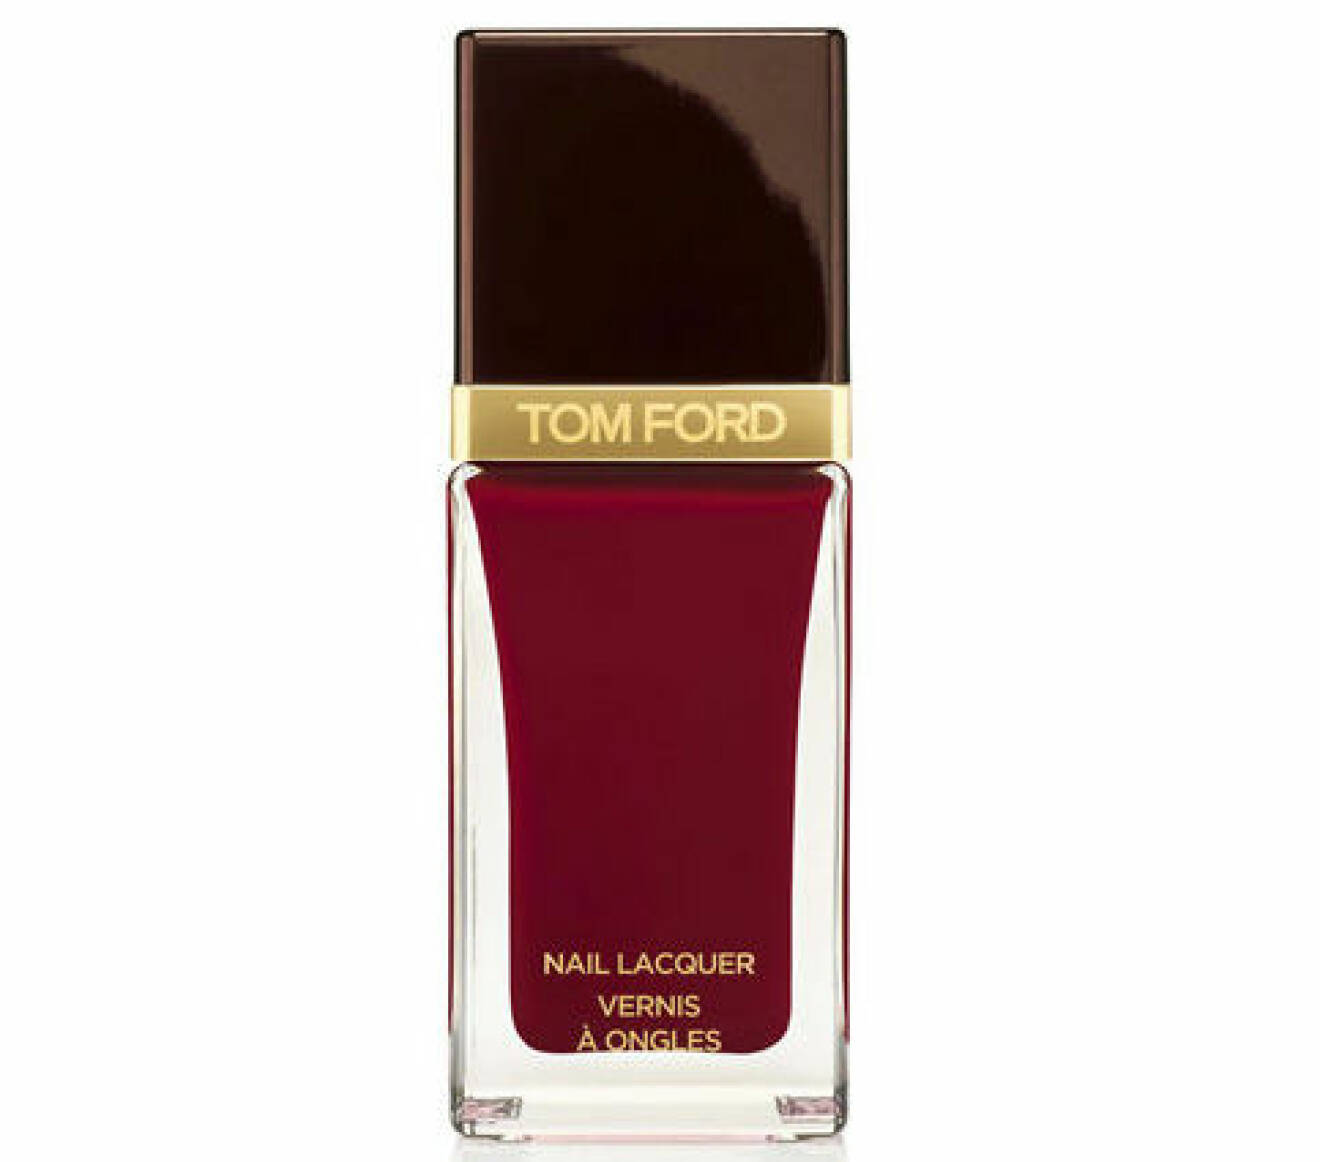 En bild på nagellacket Tom Ford i nyansen Nail Lacquer, Smoke Red.